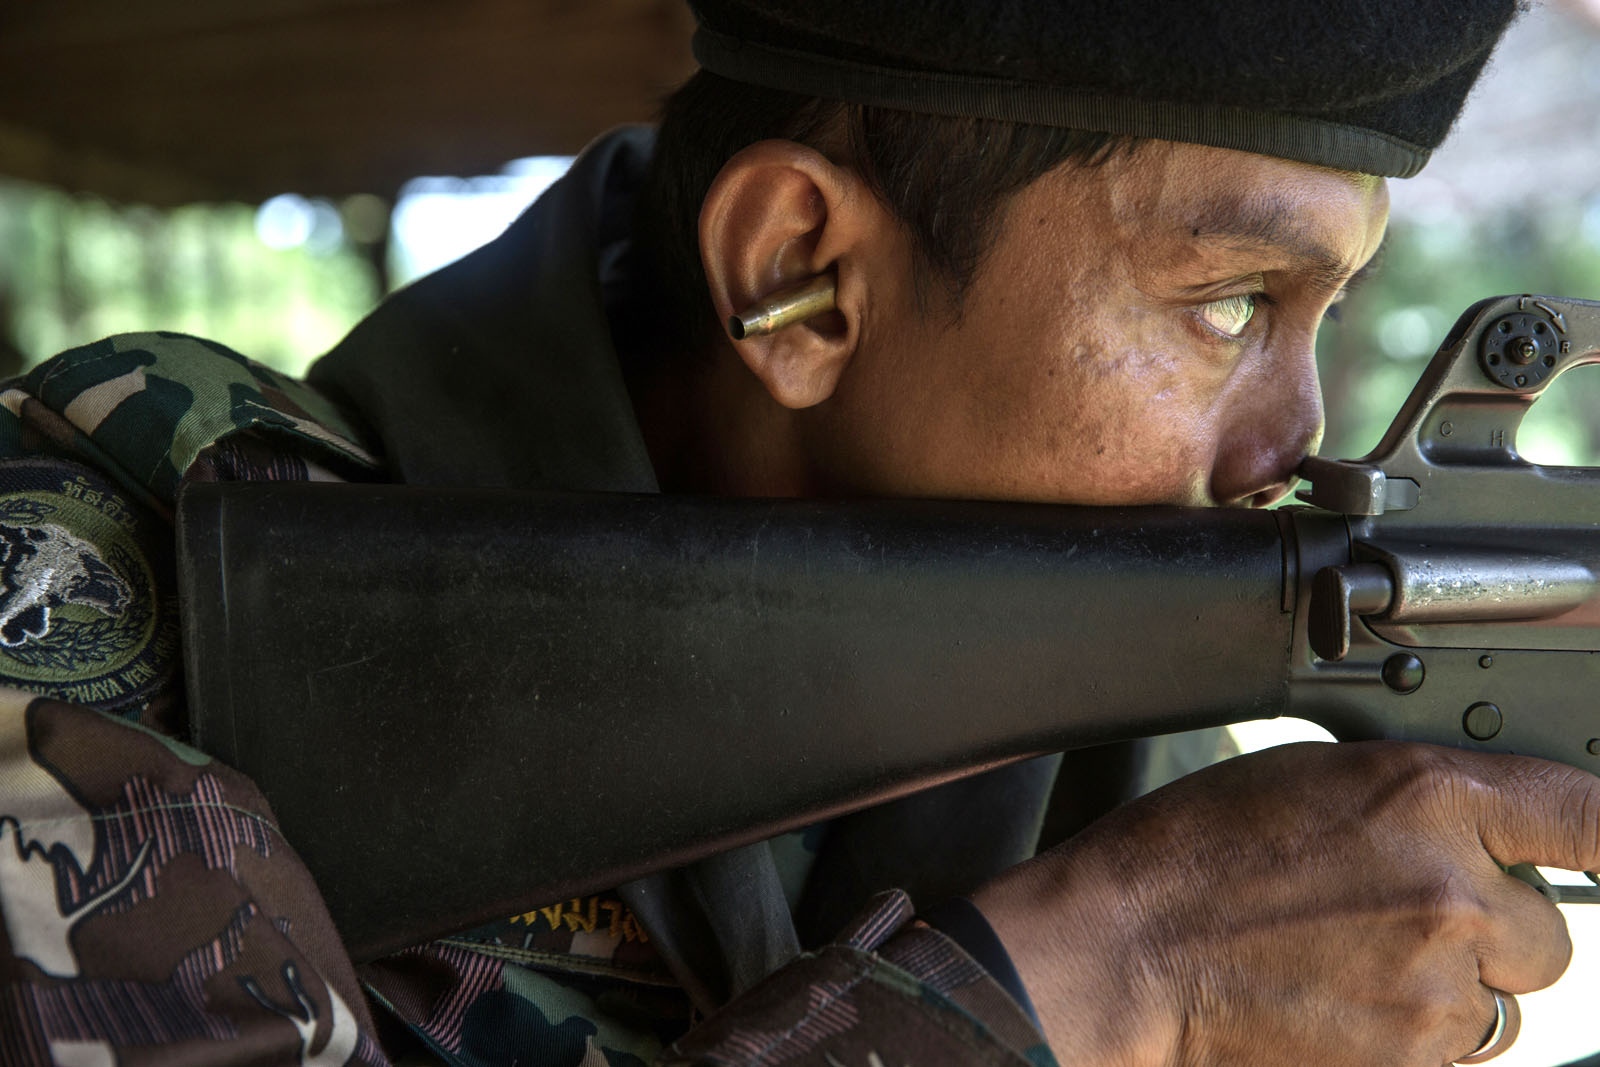 PROTECTING THAILANDS ROSEWOOD - A veteran ranger called Khom undertakes shooting practice...